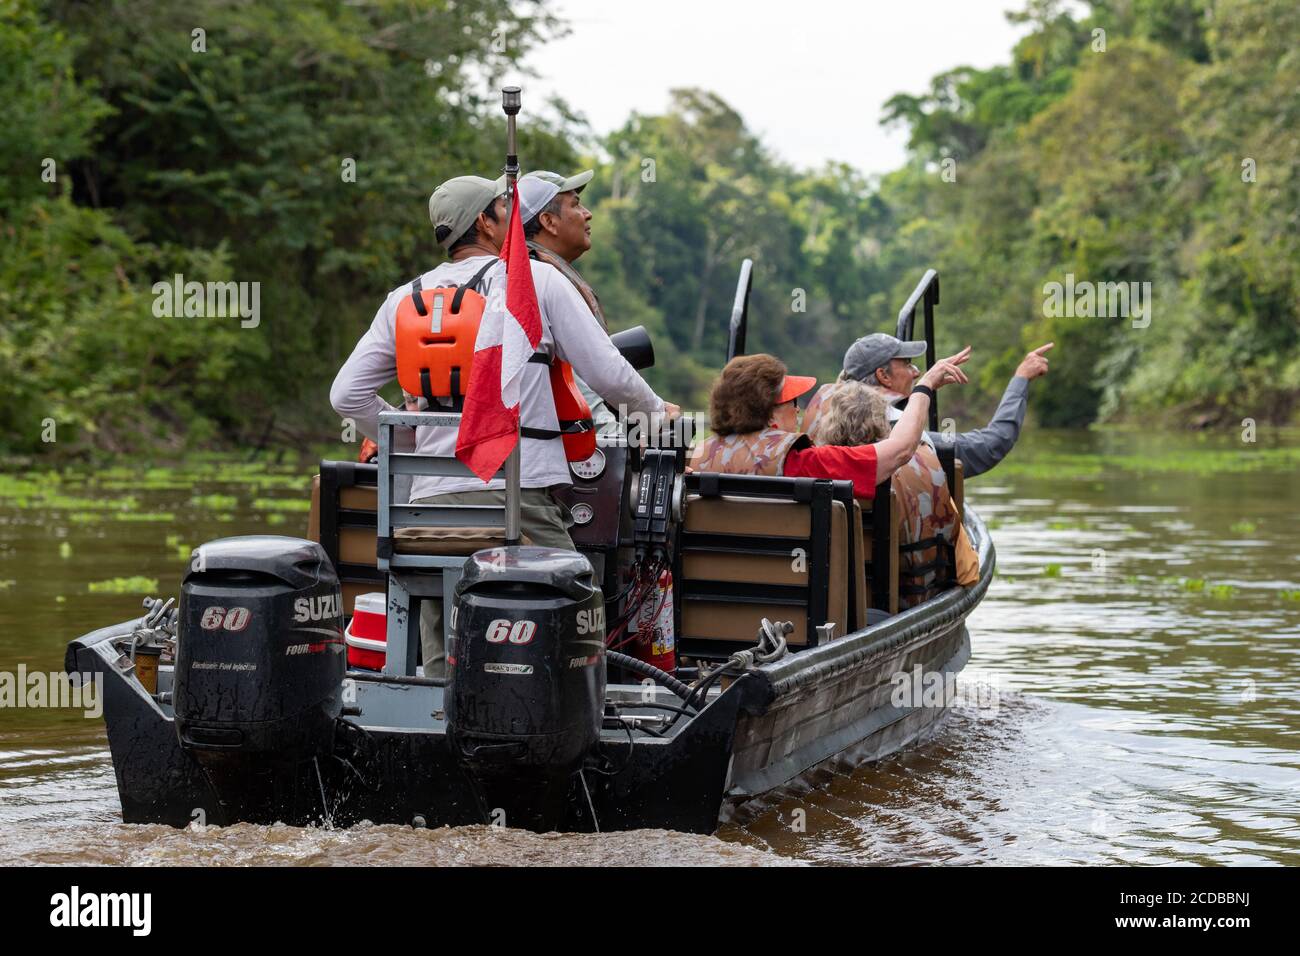 As boat safari from the expeditionary cruise Zafiro looks for wildlife along the Peruvian Amazon Stock Photo